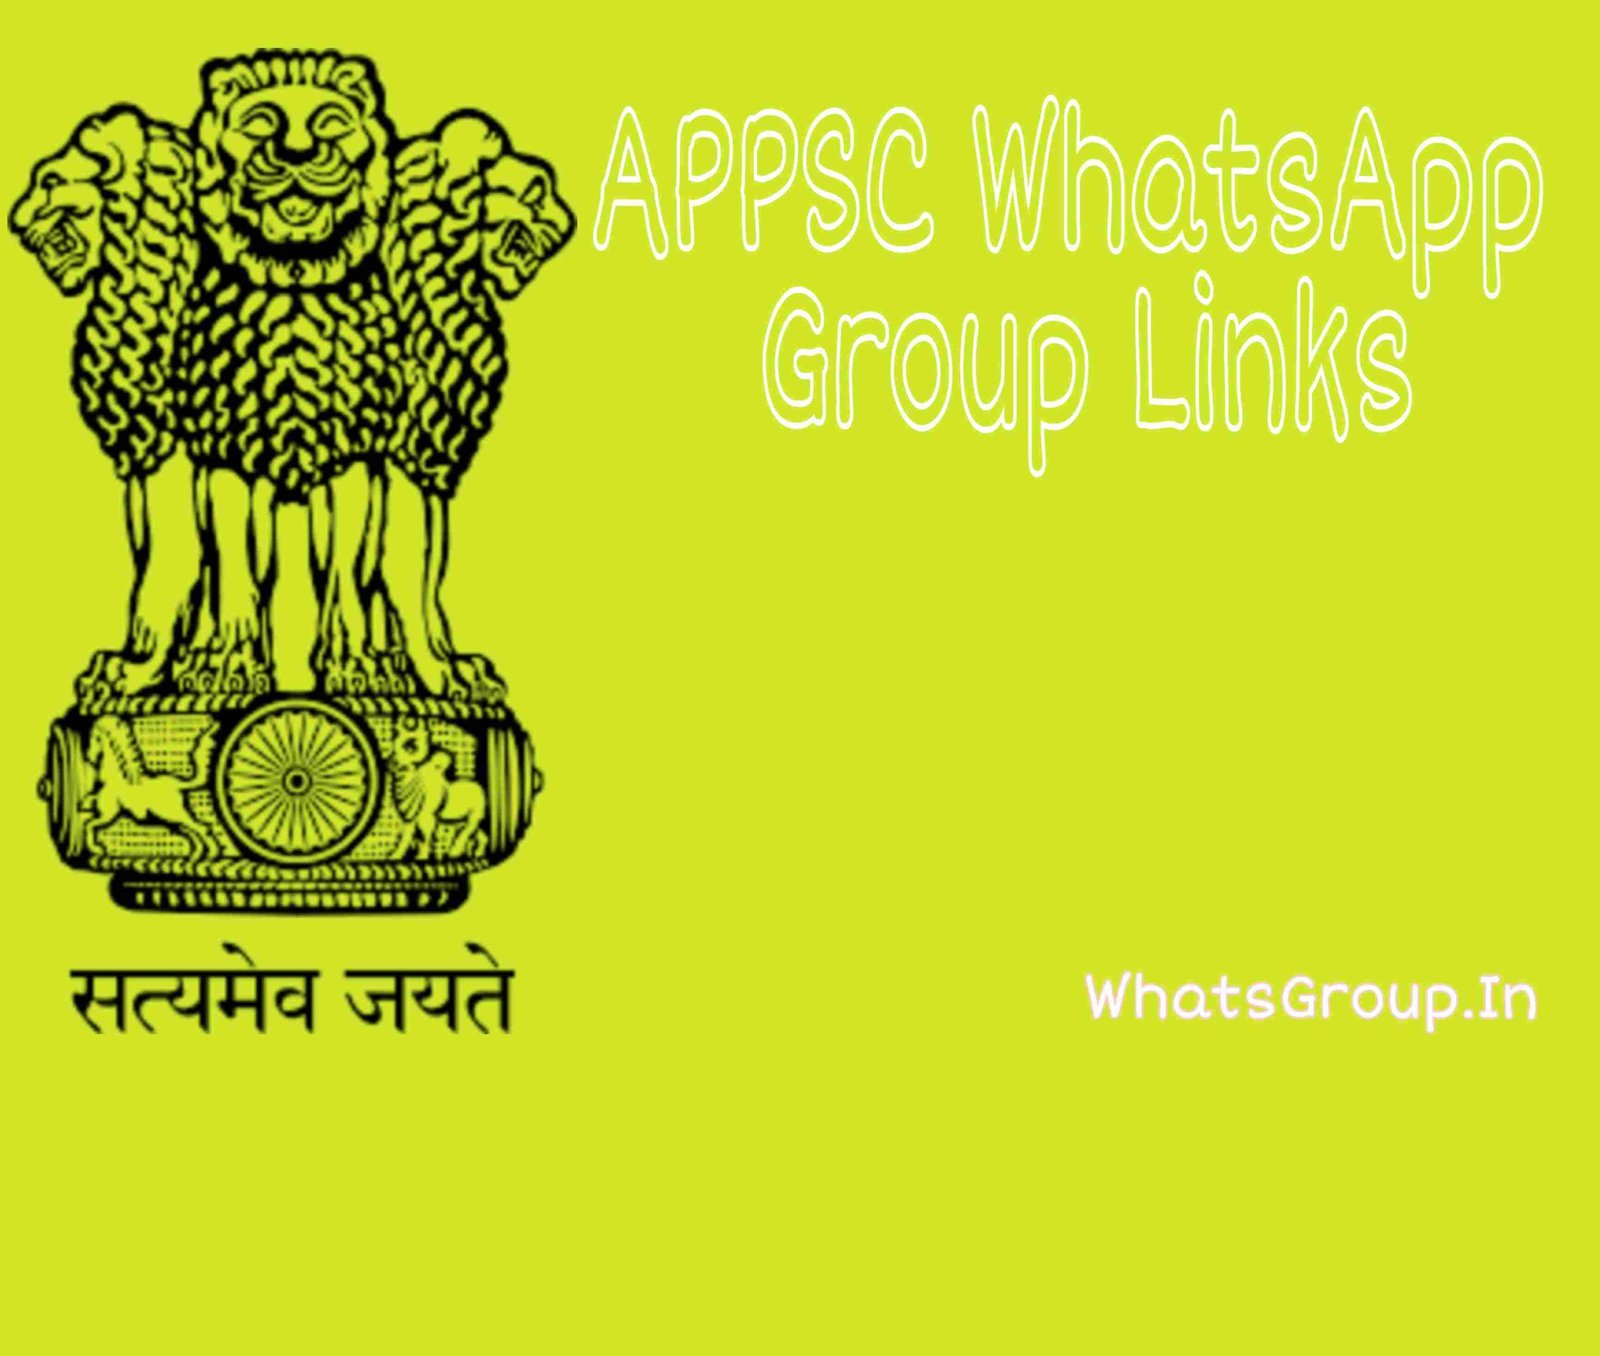 APPSC WhatsApp Group Links